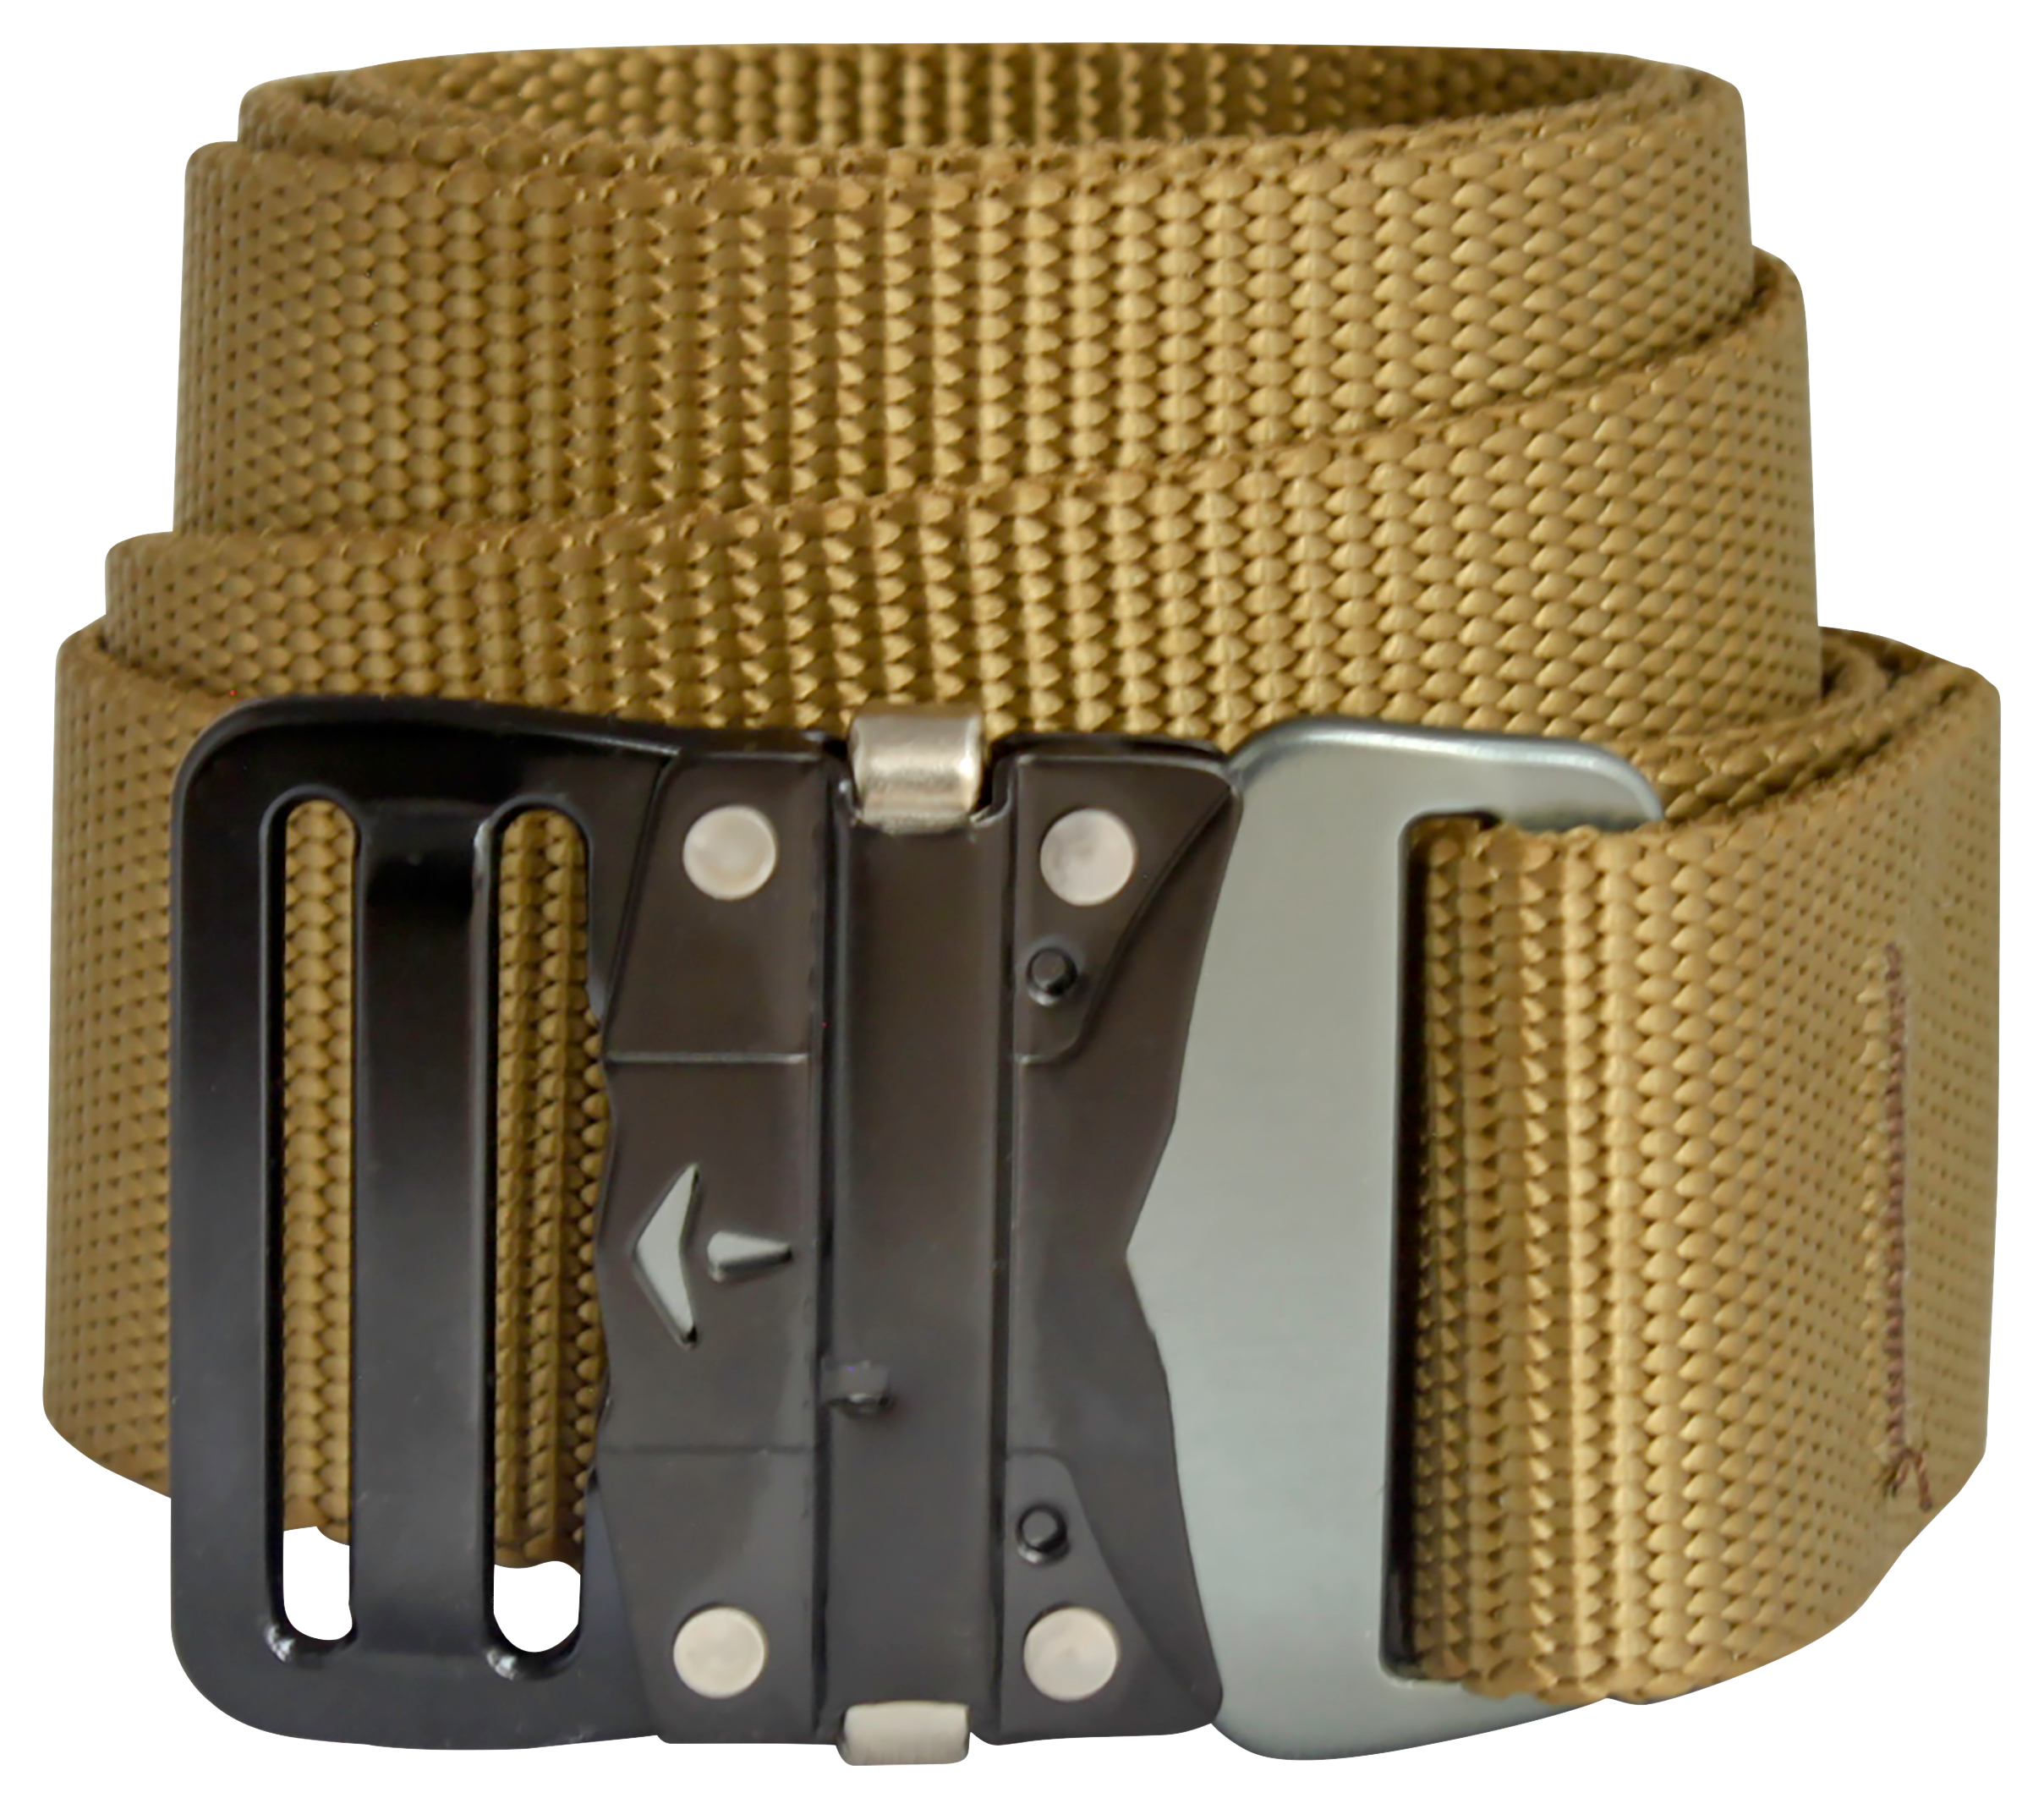 Bison Designs 38mm LoPro Buckle Belt for Men - Coyote Brown - XL